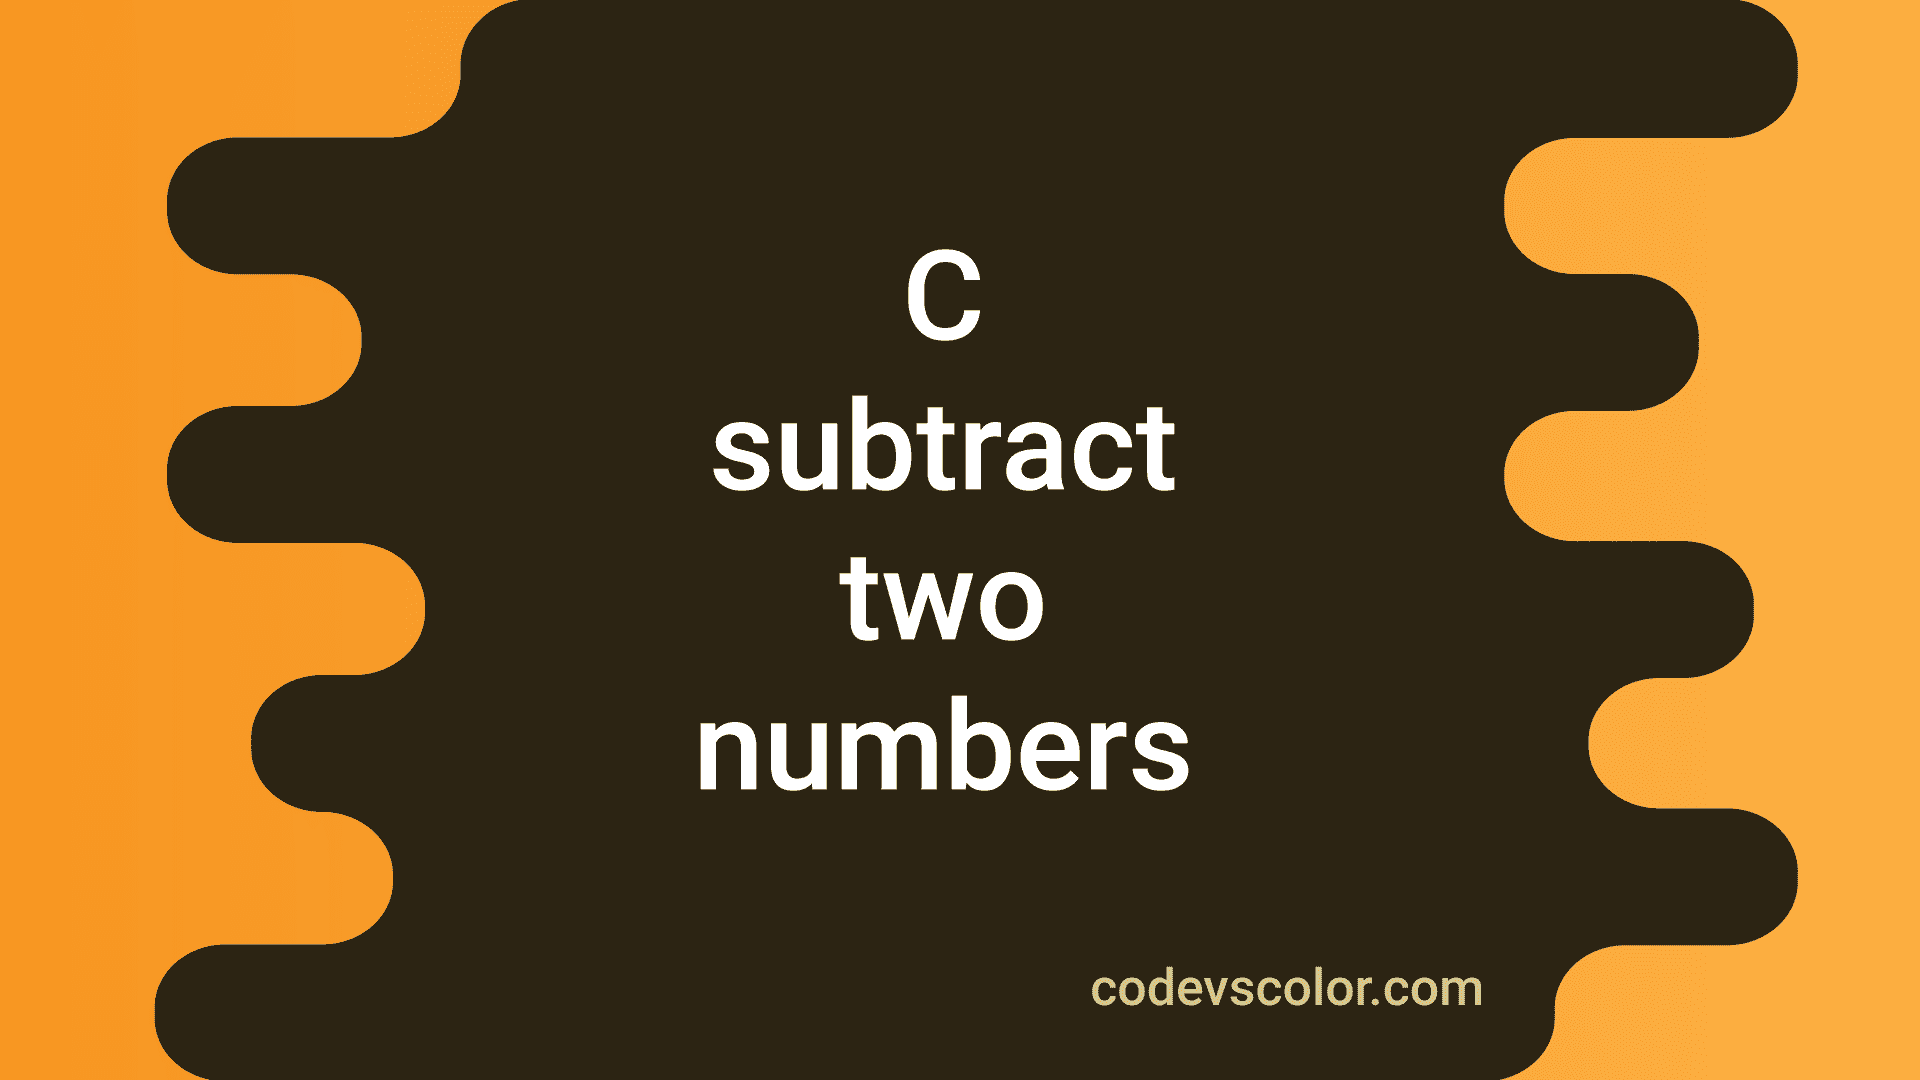 c-program-to-subtract-two-user-input-numbers-codevscolor